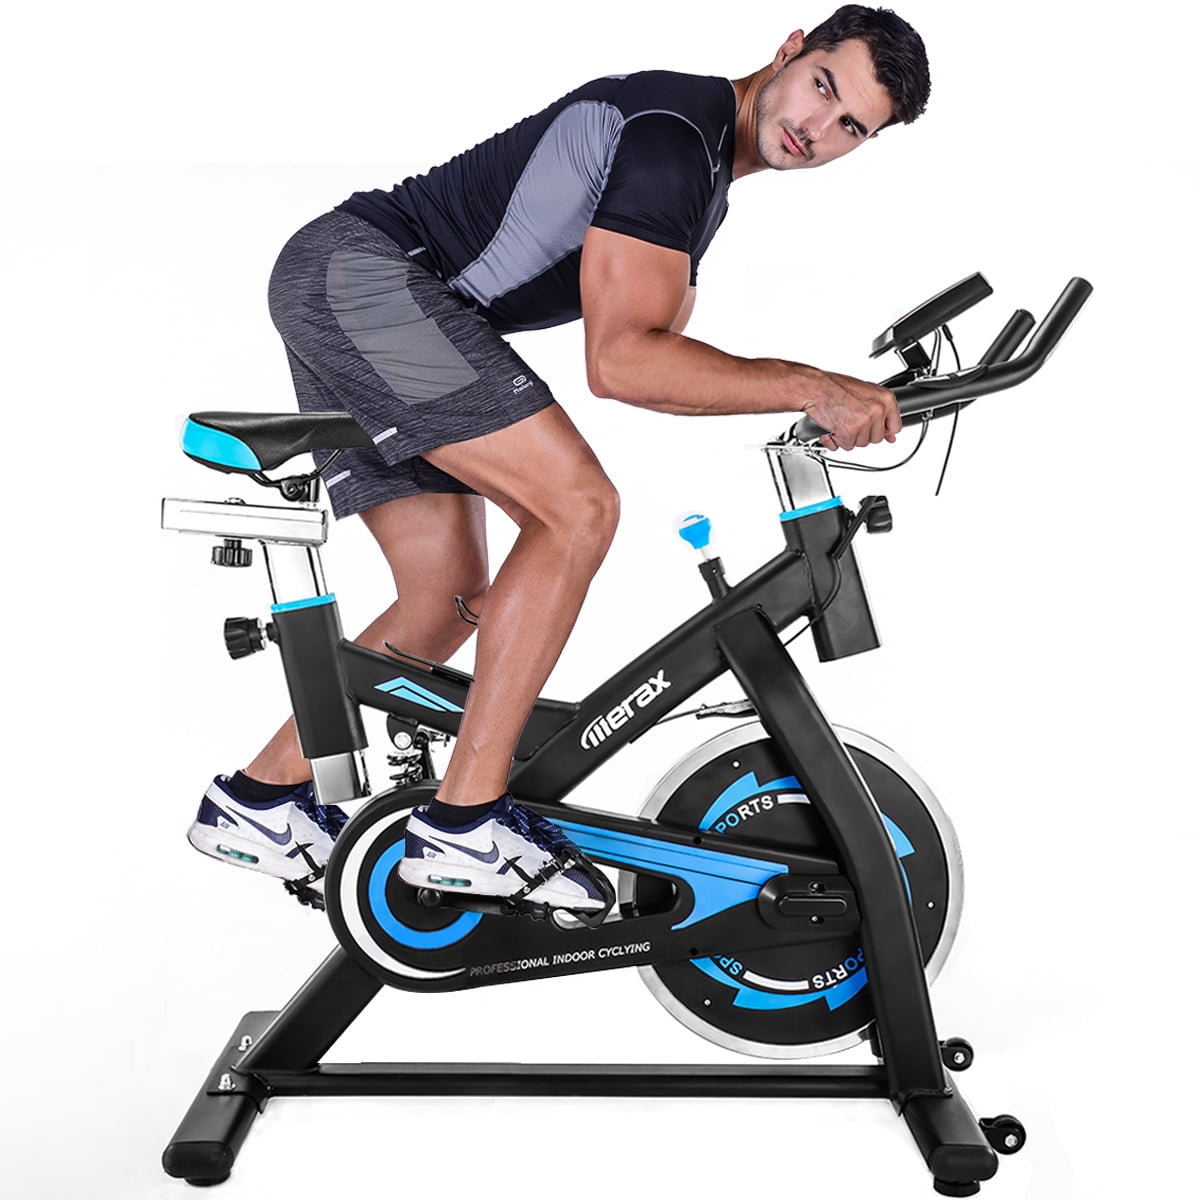 31+ Exercise Bike Stationary Cycling Cardio Workout Fitness Led Screen ... - Da26fD20 7ce7 486f A678 Ae8a4bf548bb 1.113b93bbD9616b69125580233c36306e